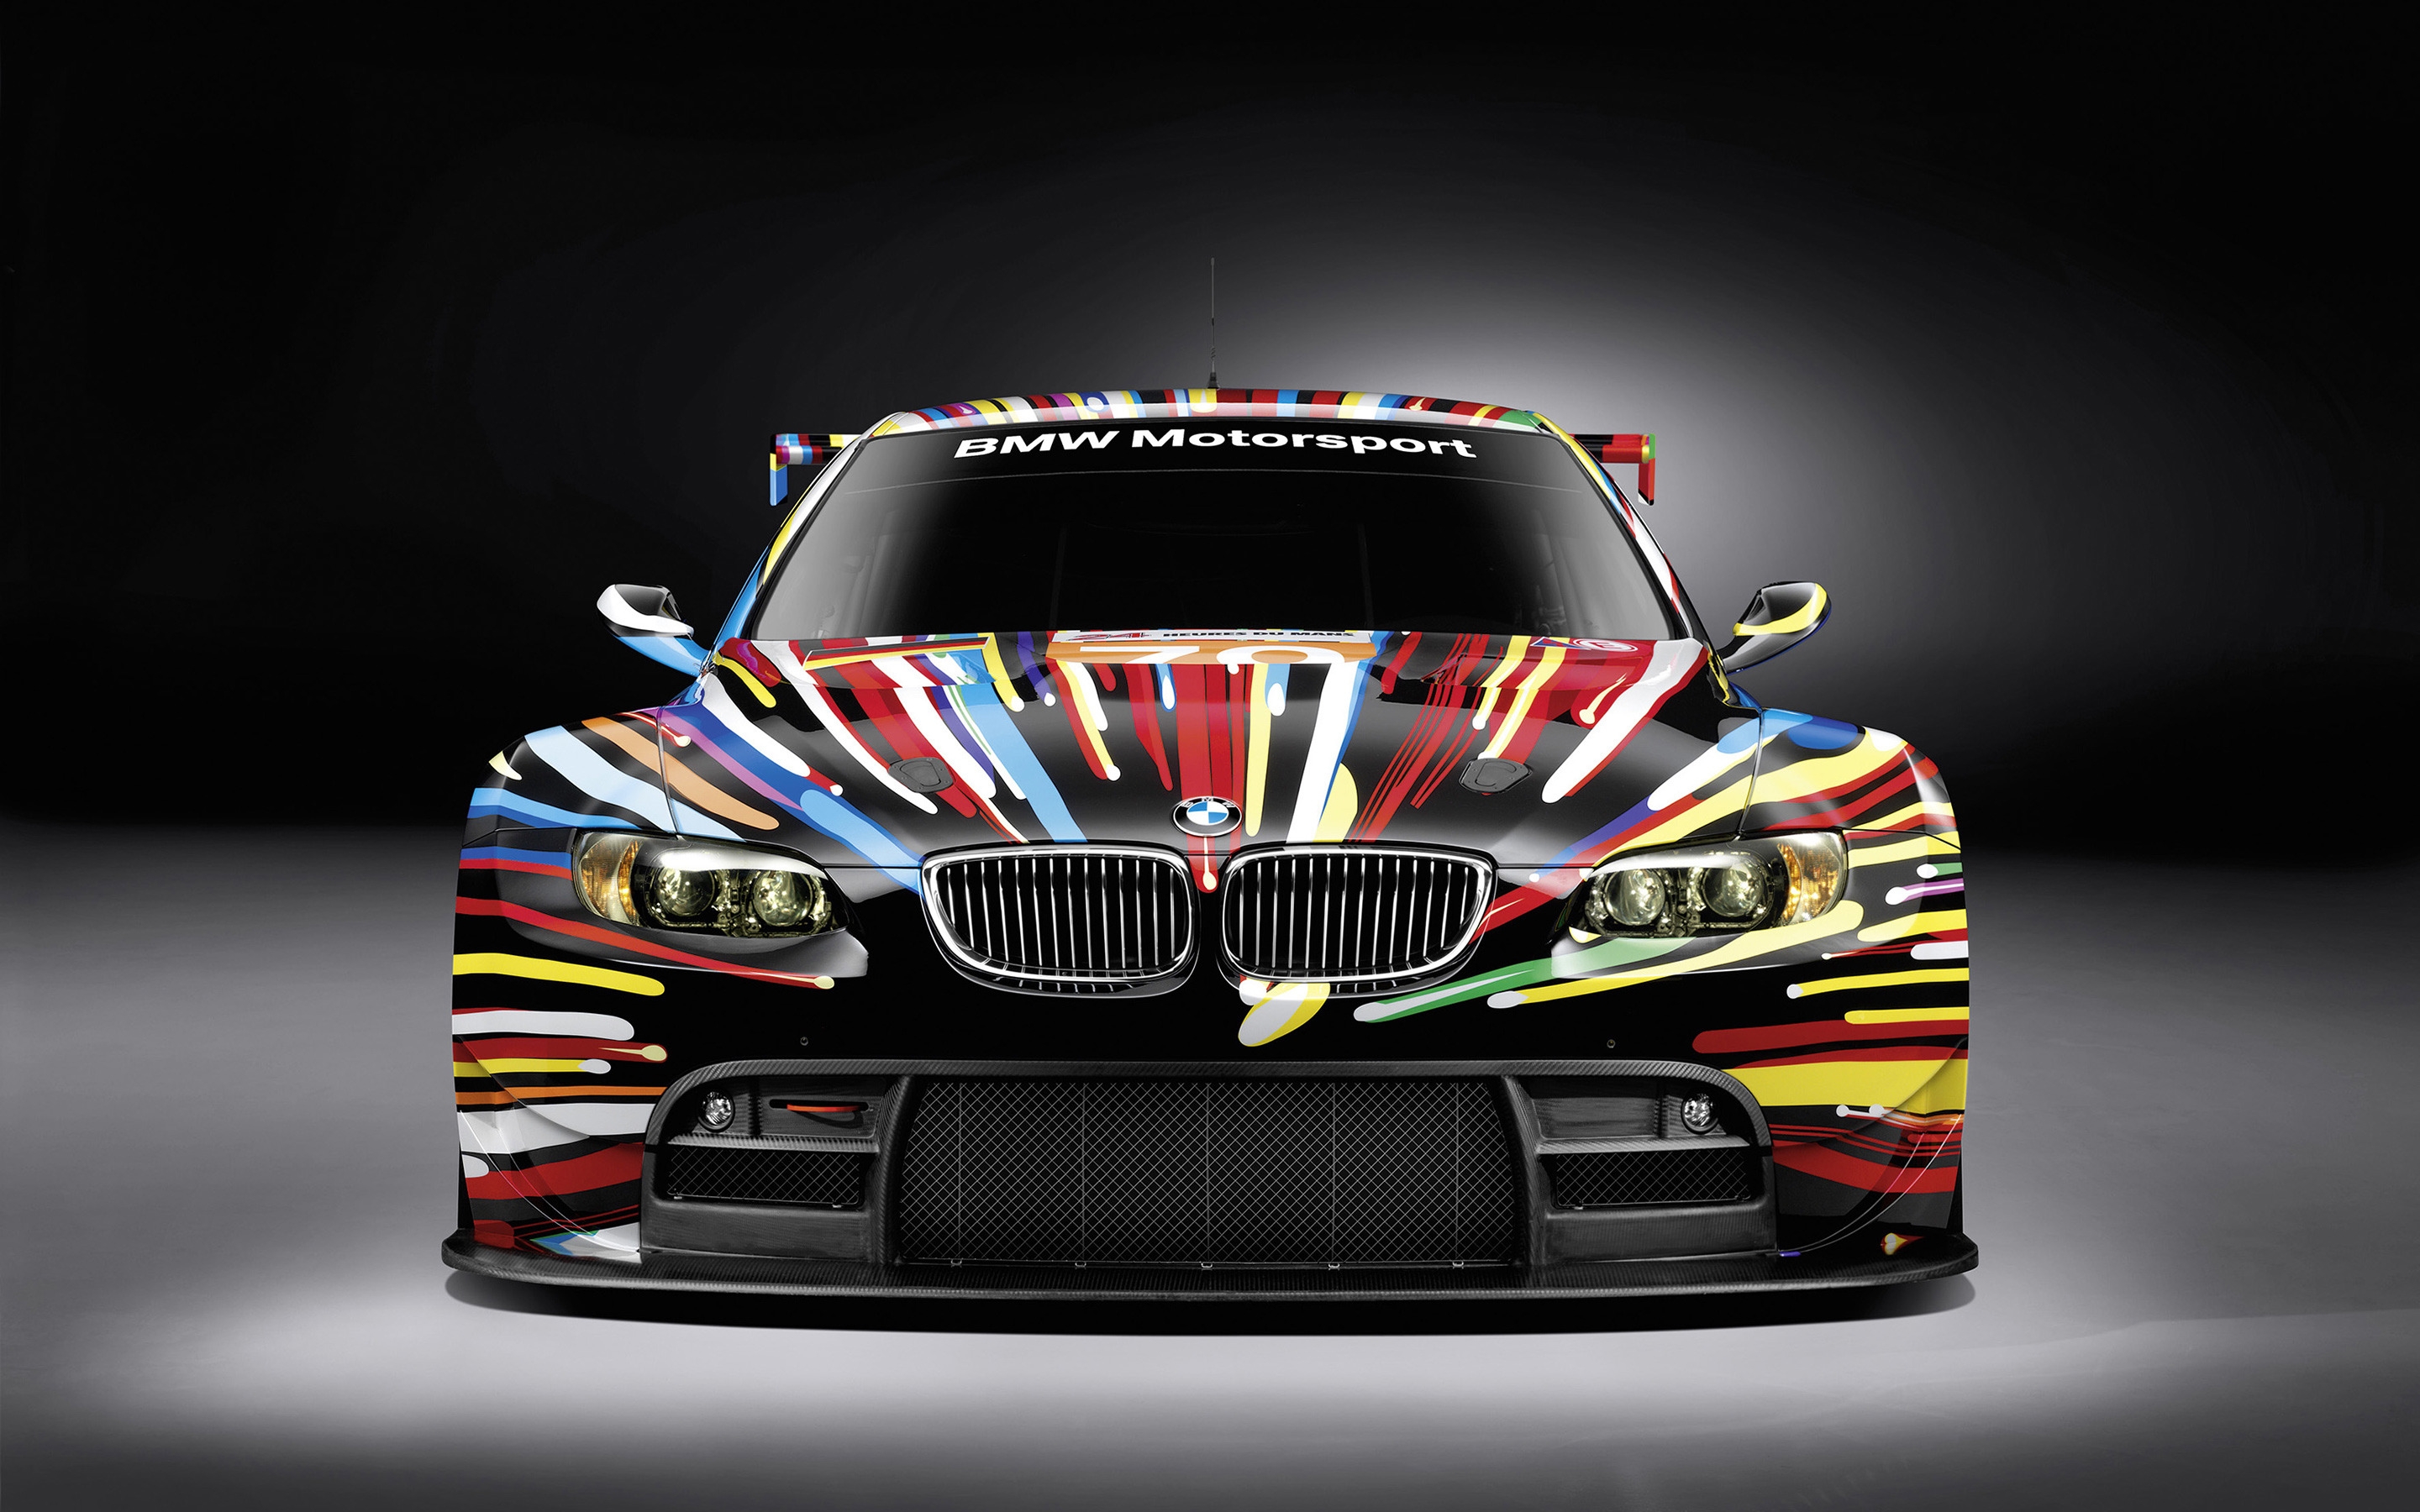 BMW M3 GT 2 Art for 2880 x 1800 Retina Display resolution